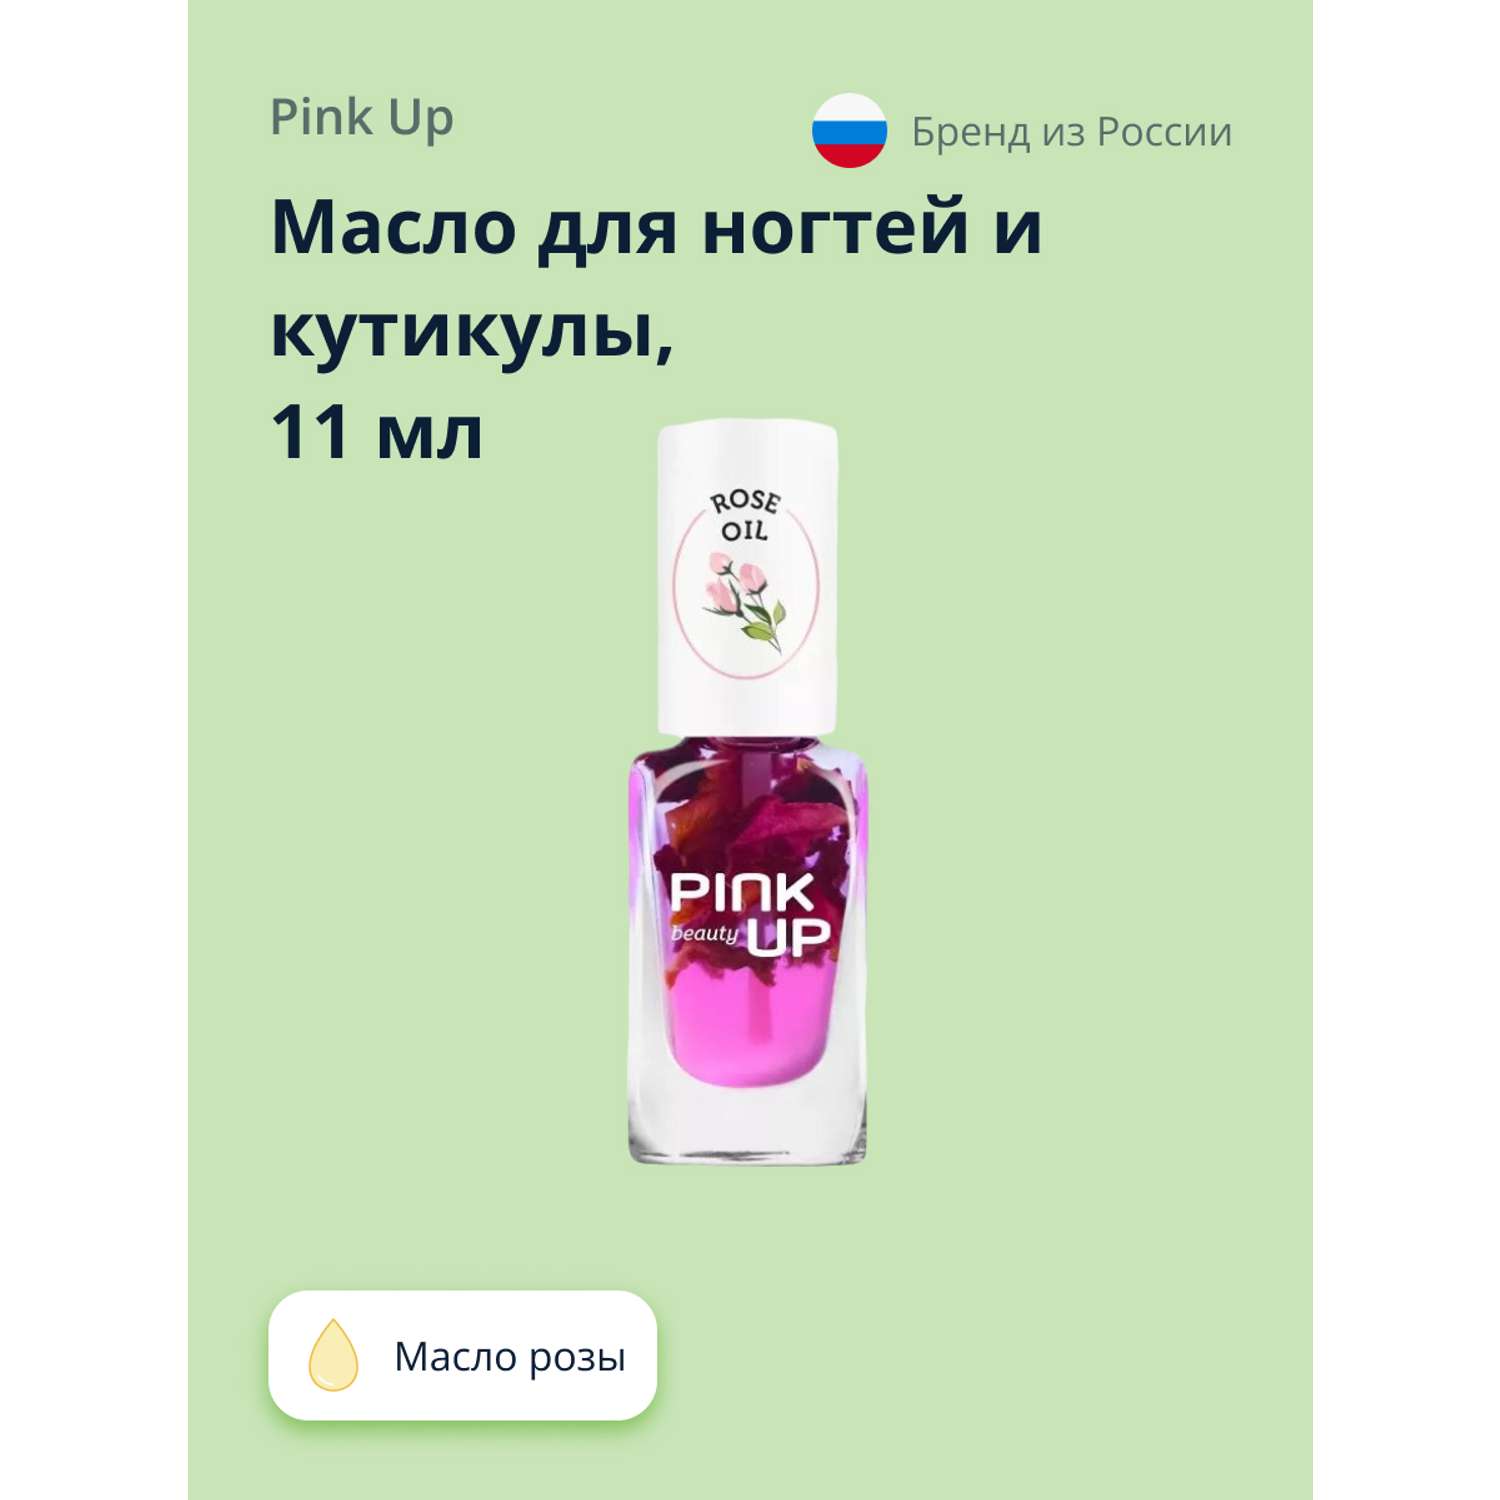 Масло для ногтей и кутикулы Pink Up rose oil 11 мл - фото 1